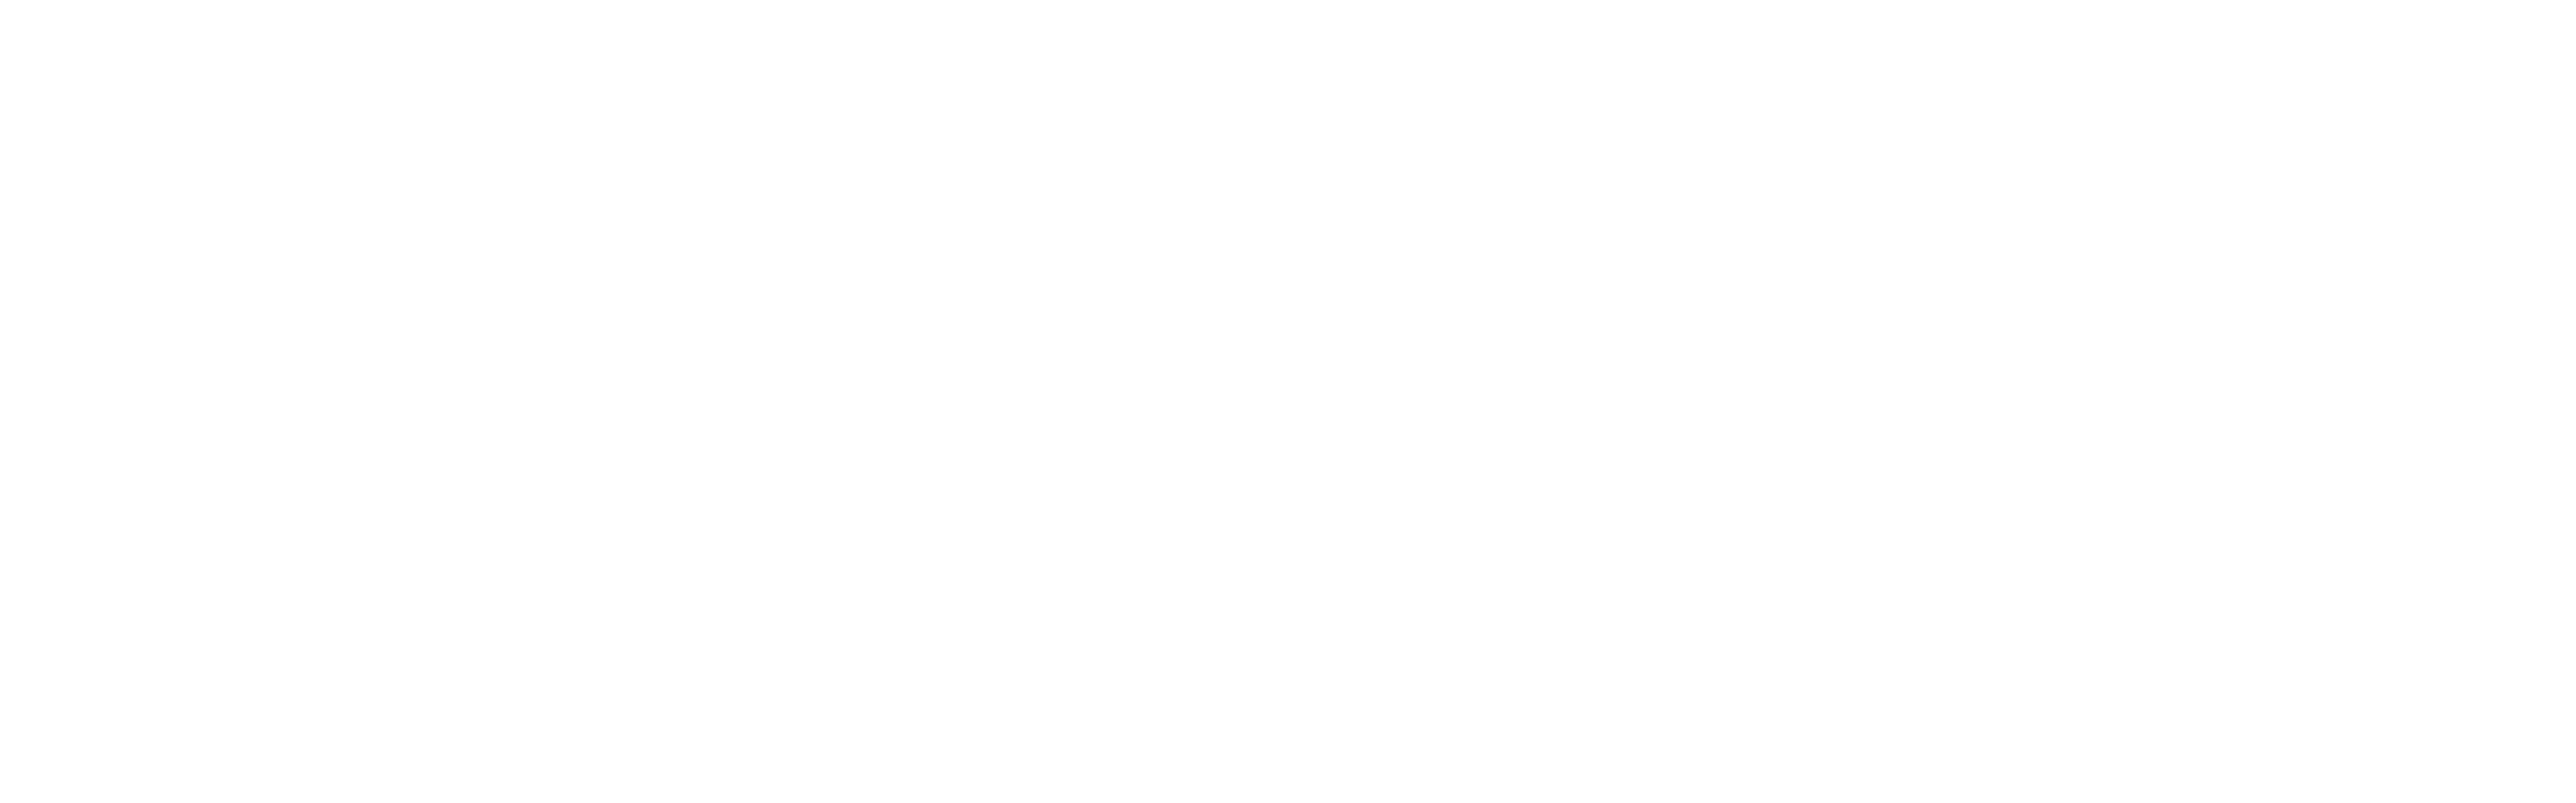 Urban League of Louisiana Logo - White